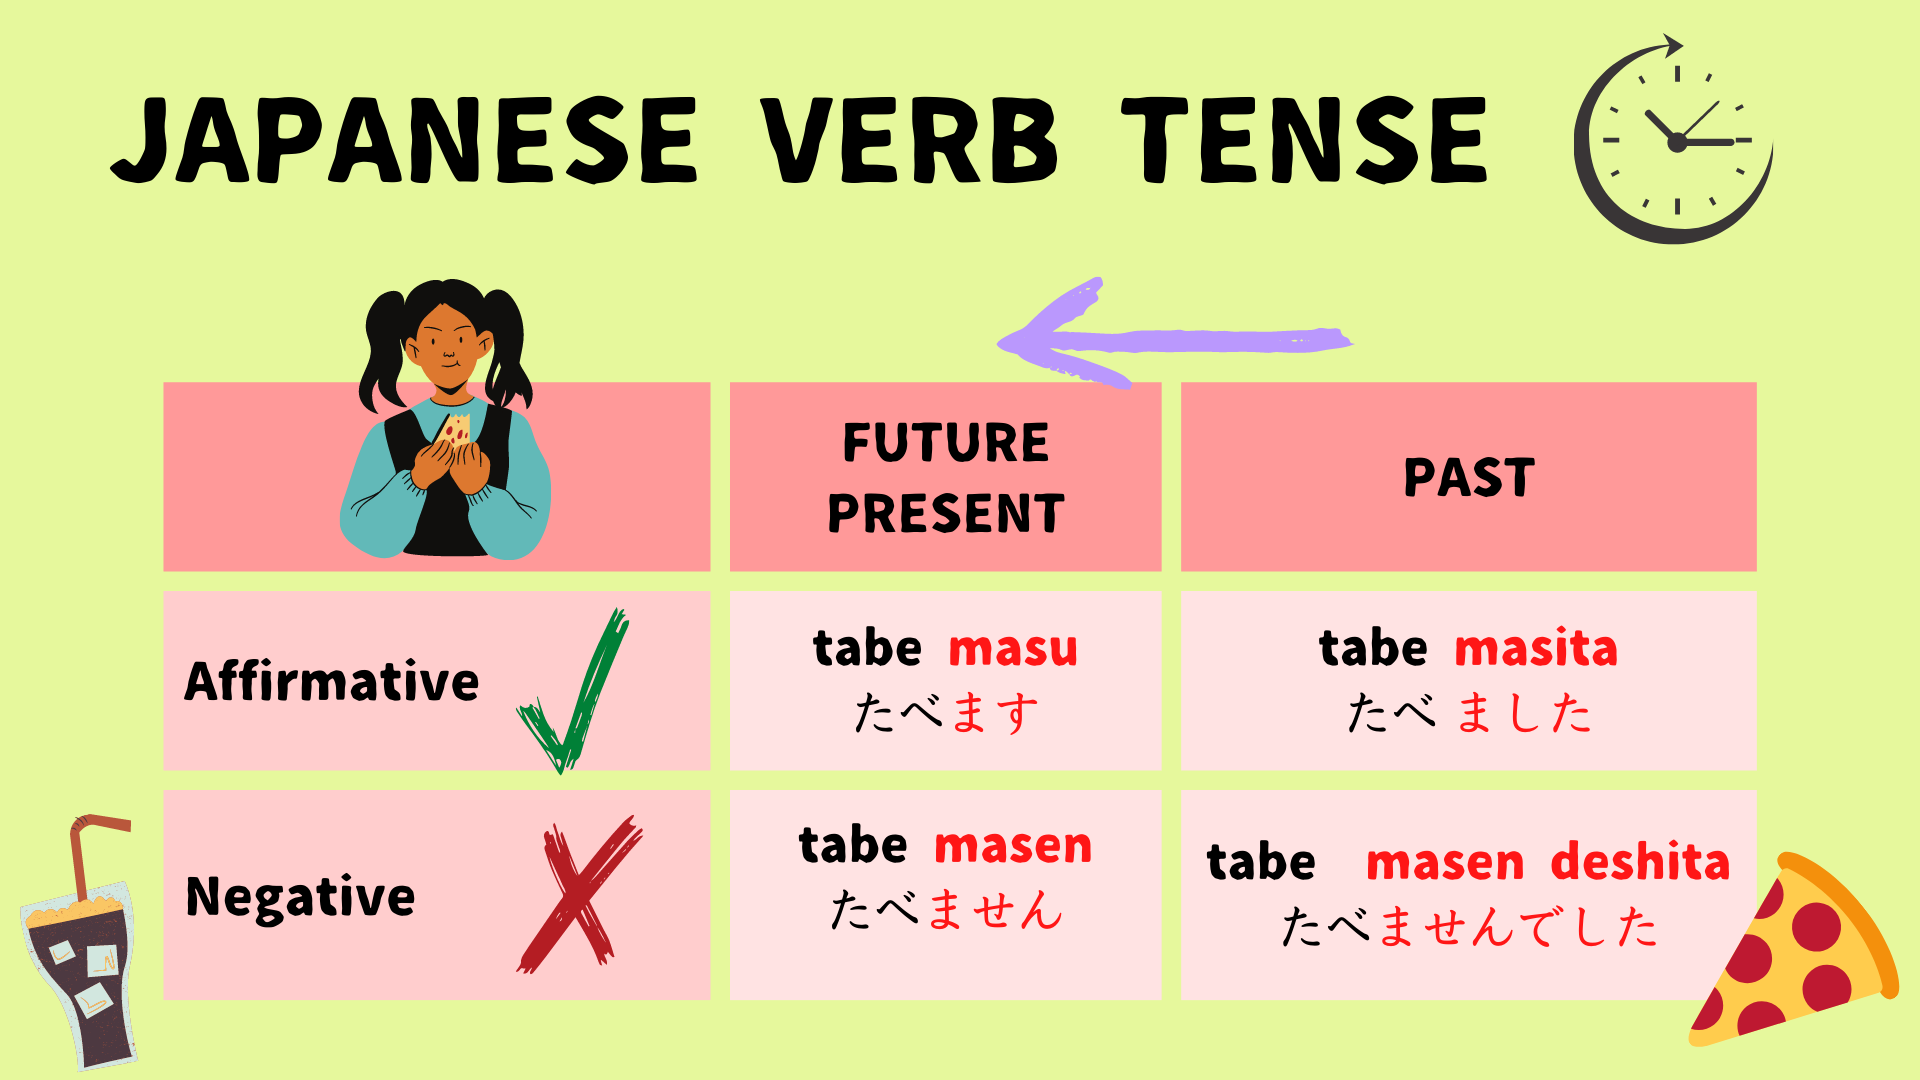 Japanese Tense For Verbs Linkup Nippon Study Japanese